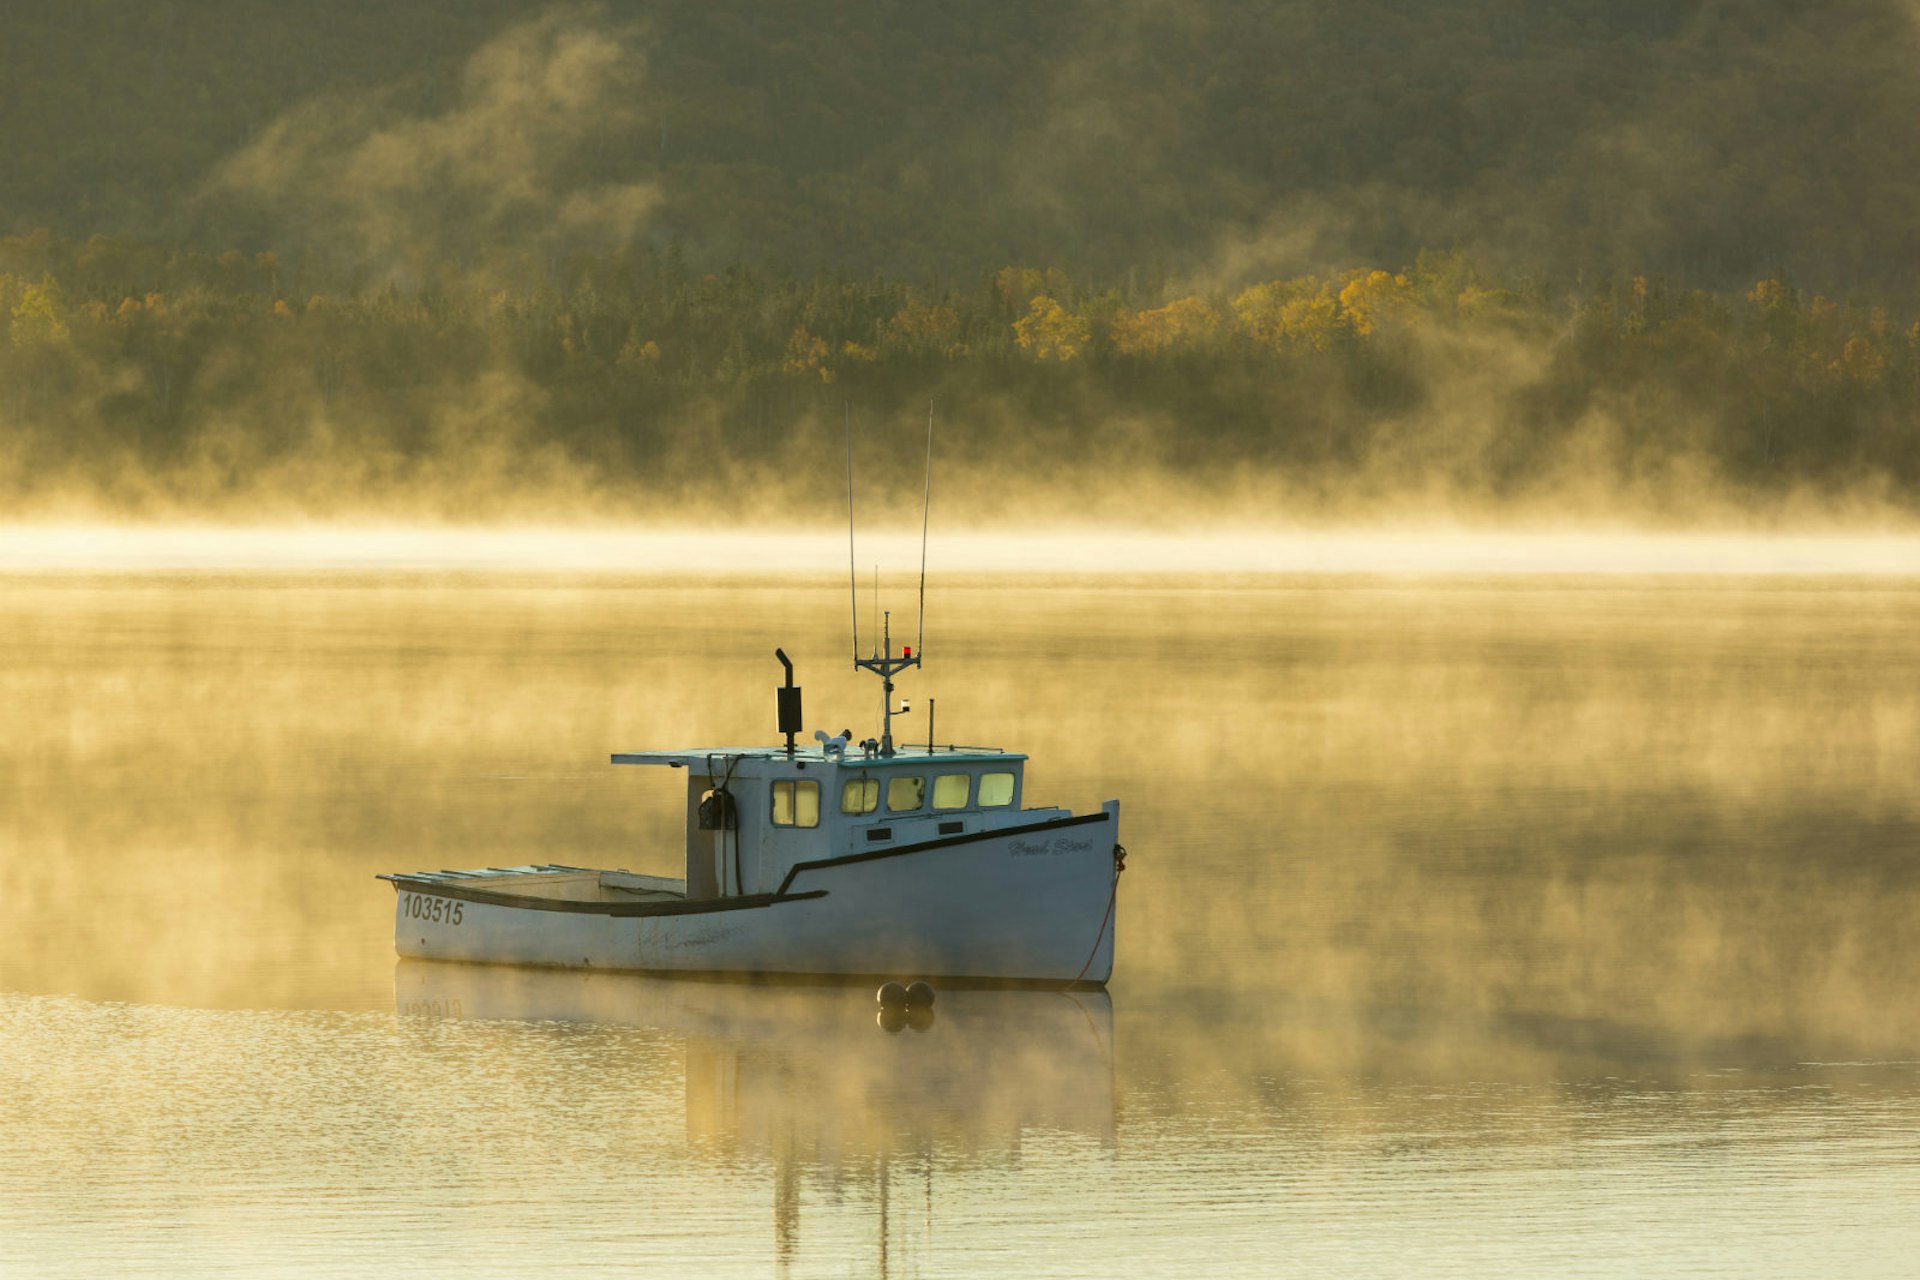 Bras d’Or Lake, Nova Scotia, Canada © Barrett & MacKay / Getty Images